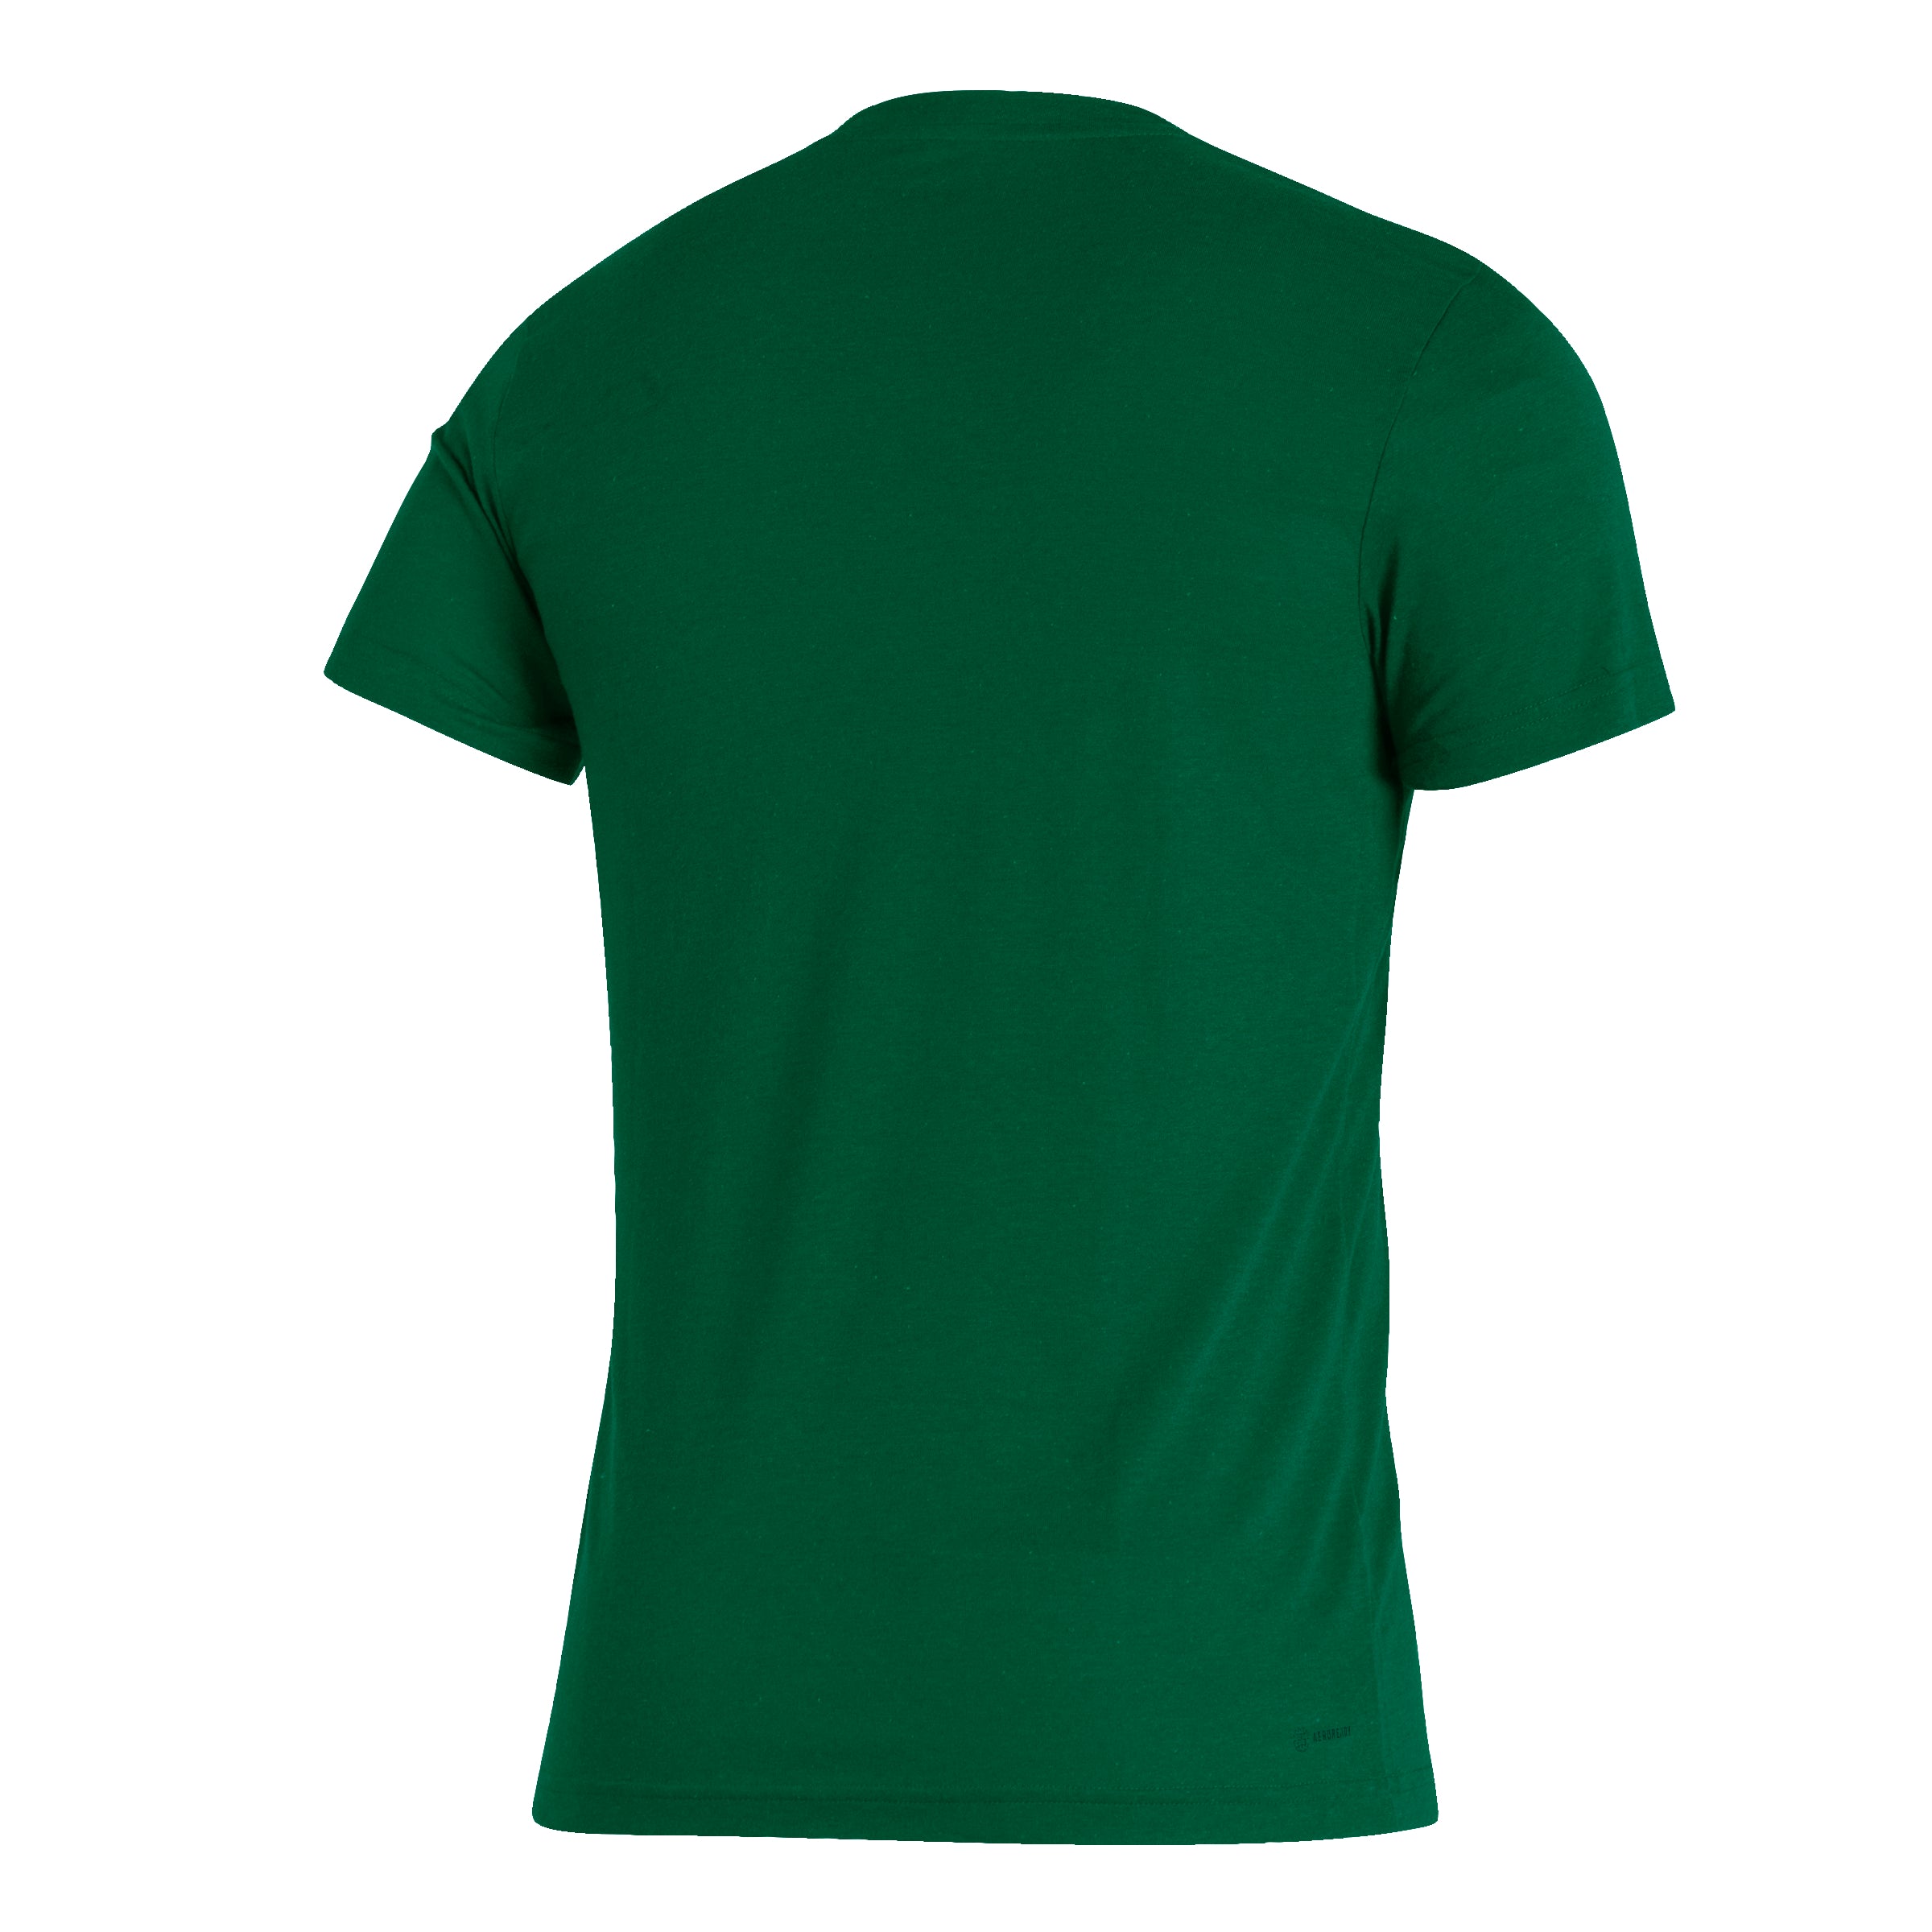 Miami Hurricanes adidas Old English M Crest Tri-Blend T-Shirt - Green